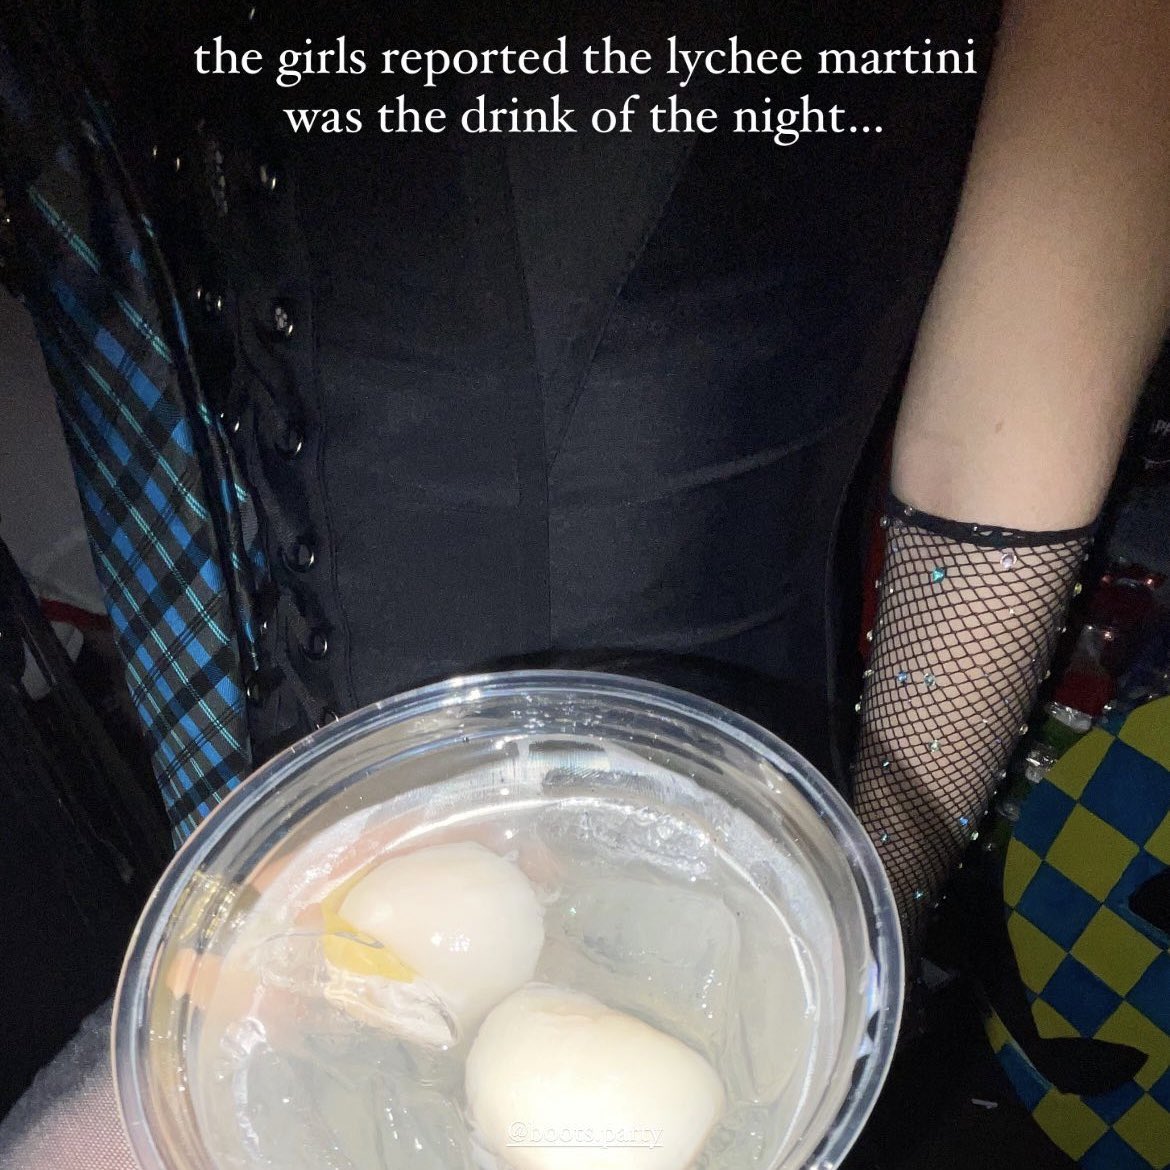 gay guys eat crab rangoon but girls drink lychee martinis